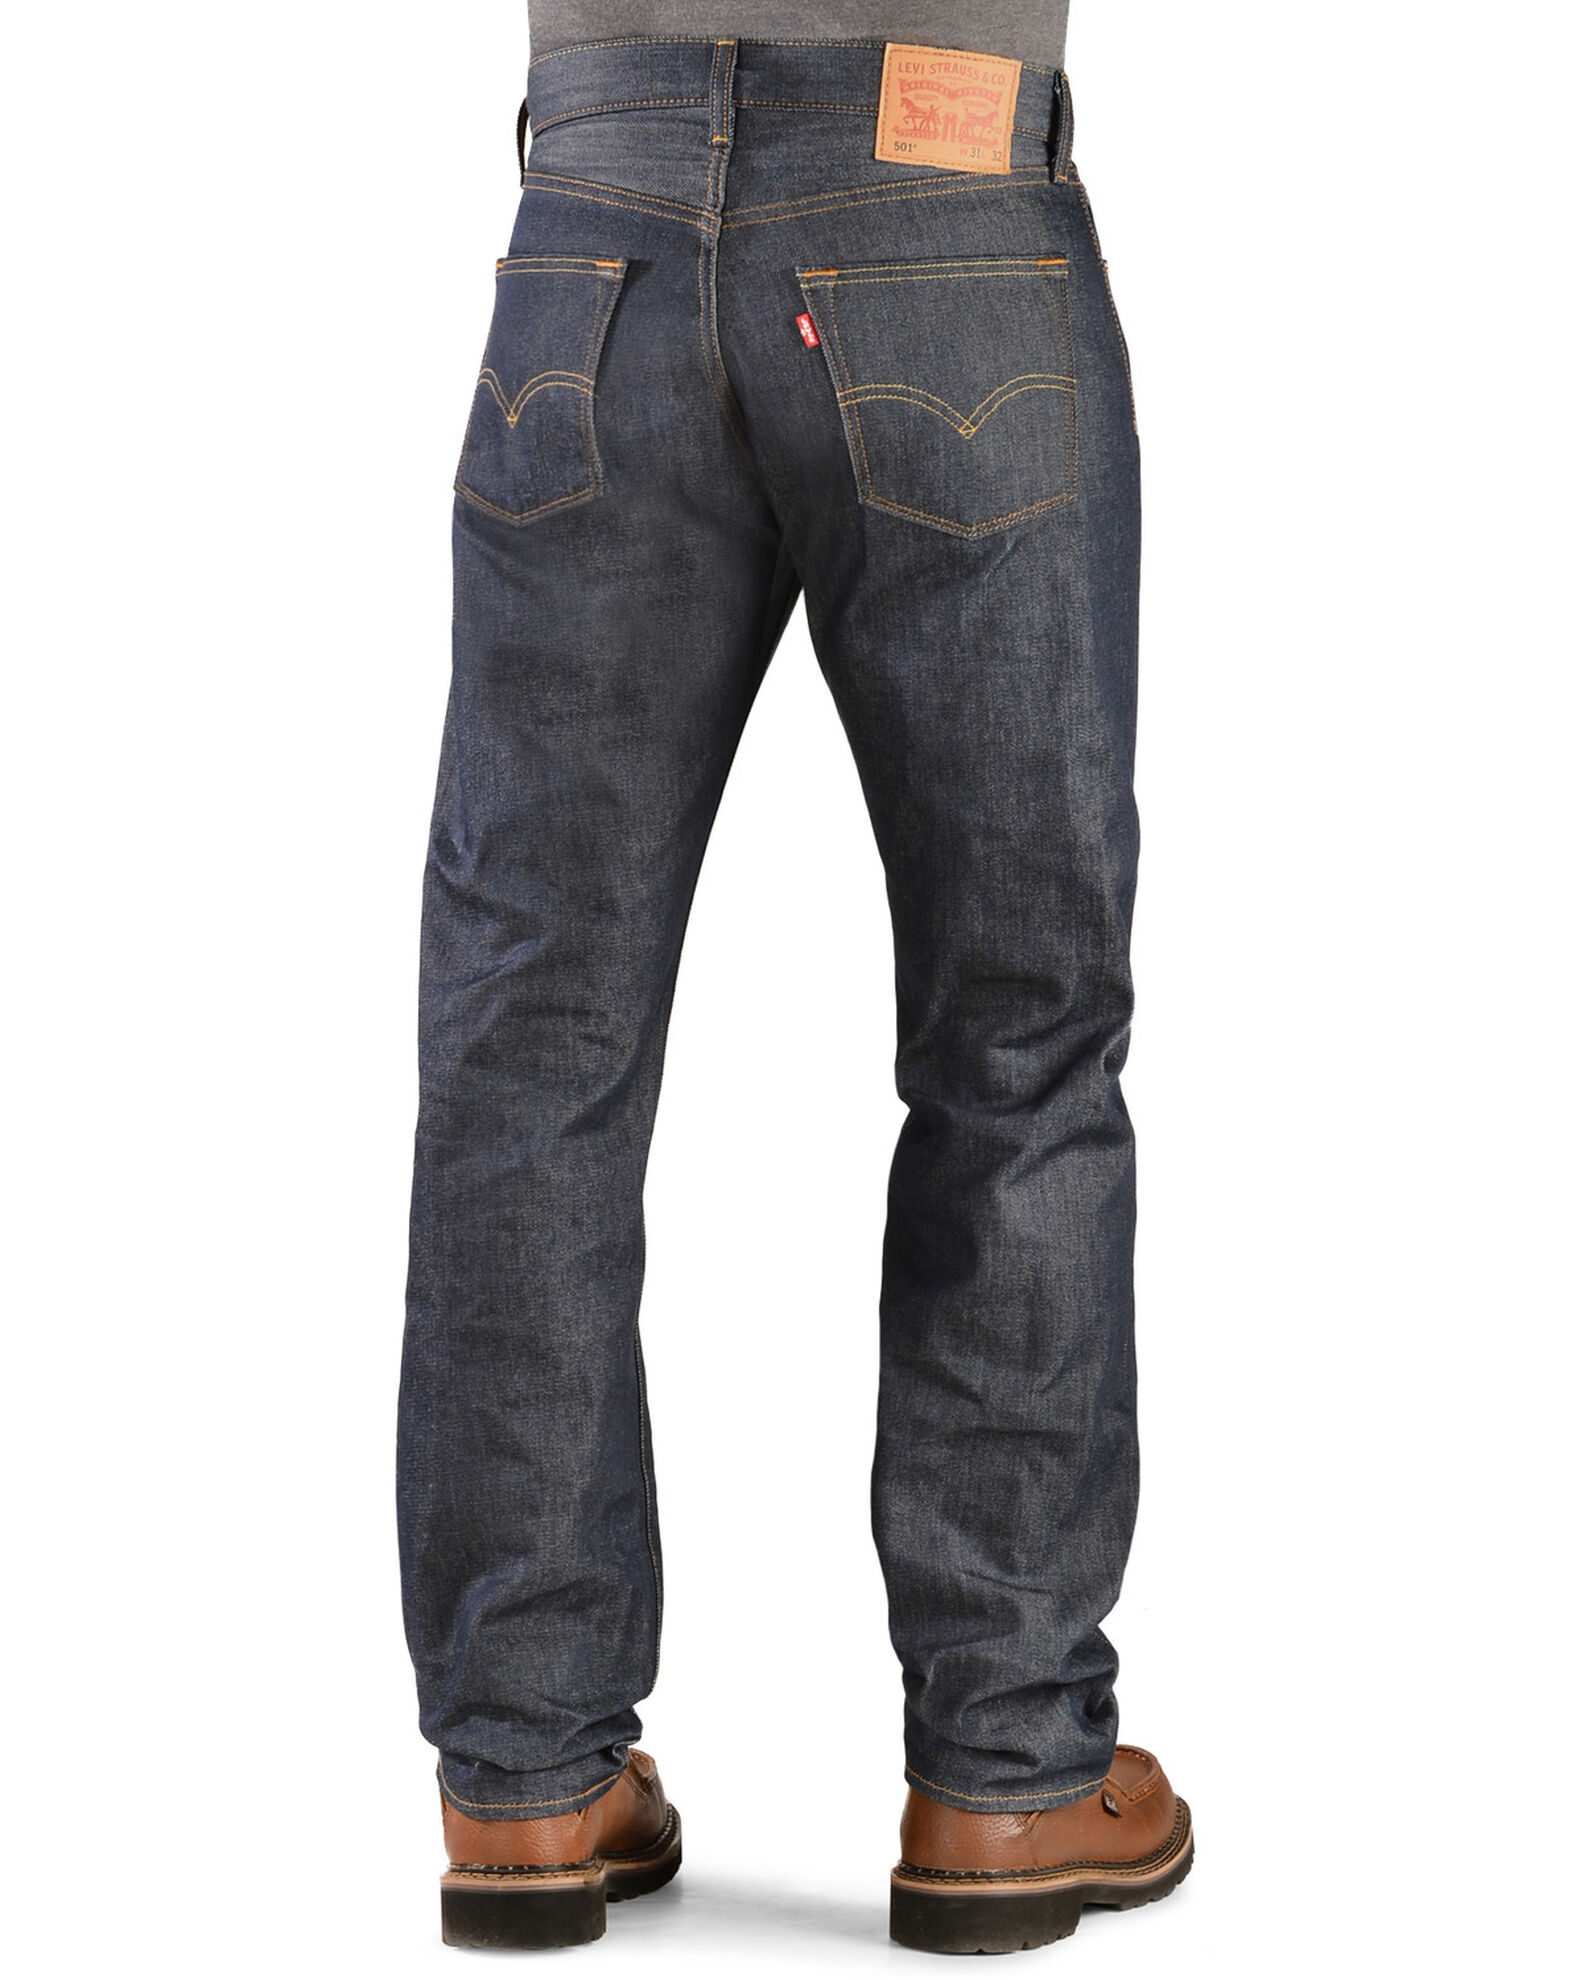 Levi's Men's 501 Original Shrink-to-Fit Regular Leg Jeans - Outfitter